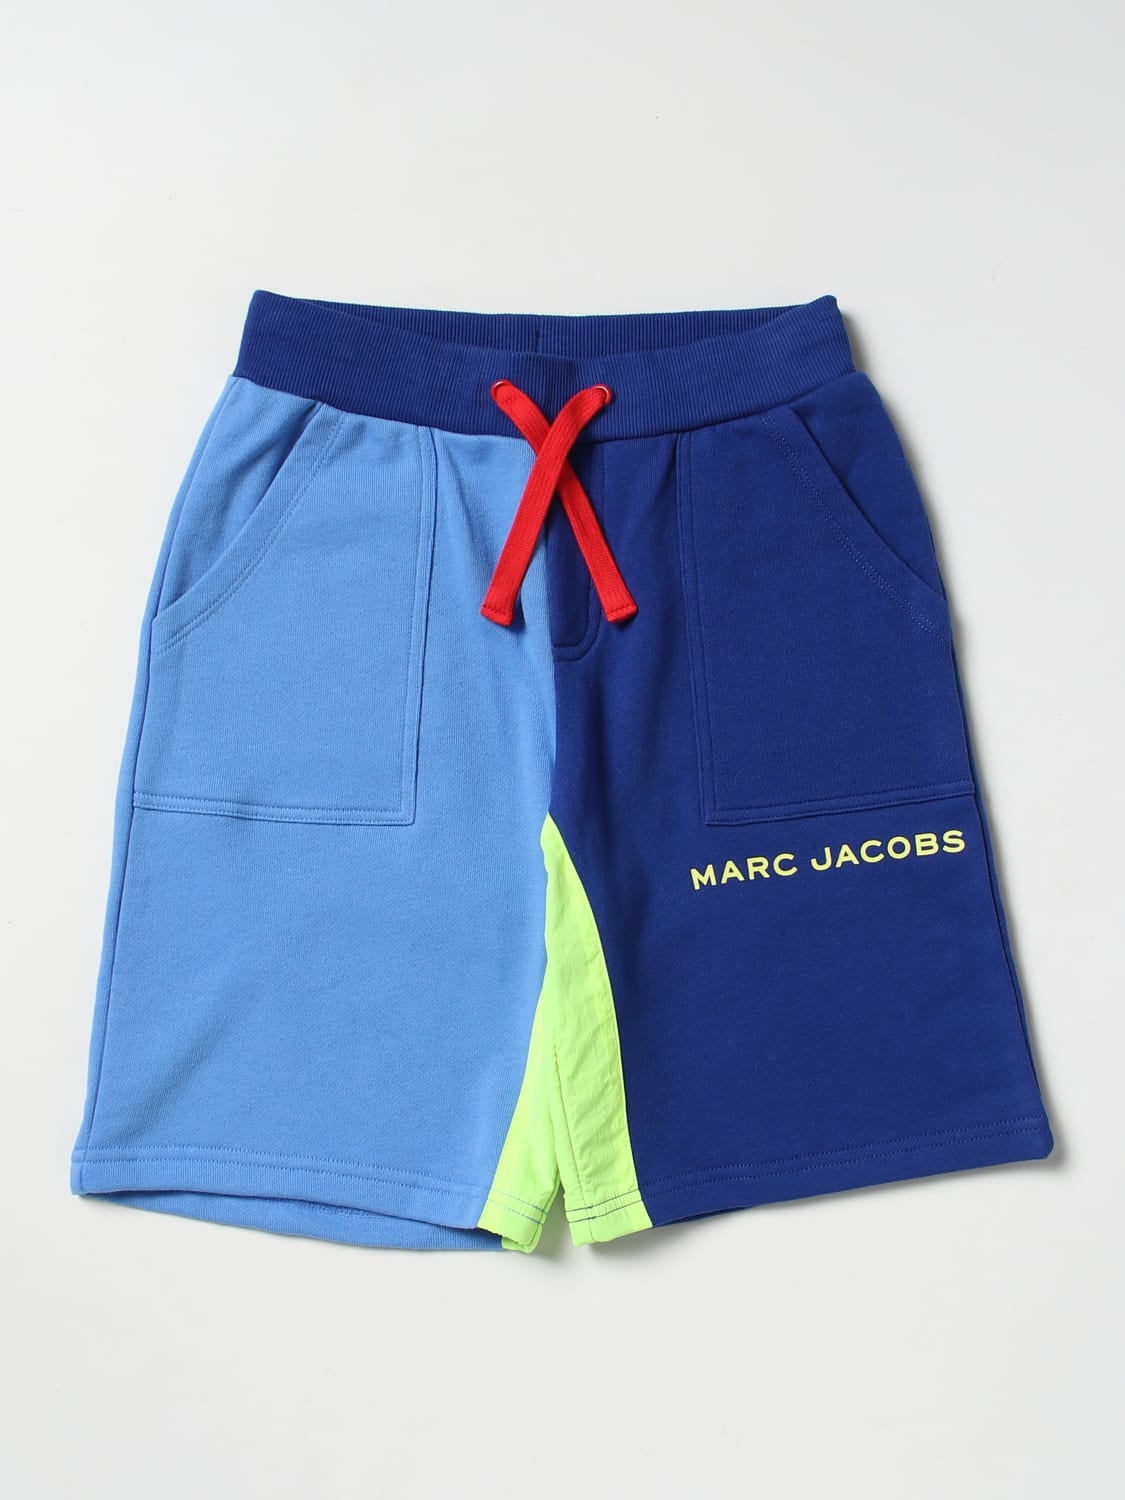 Marc Jacobs メンズショーツ 短パン - パンツ